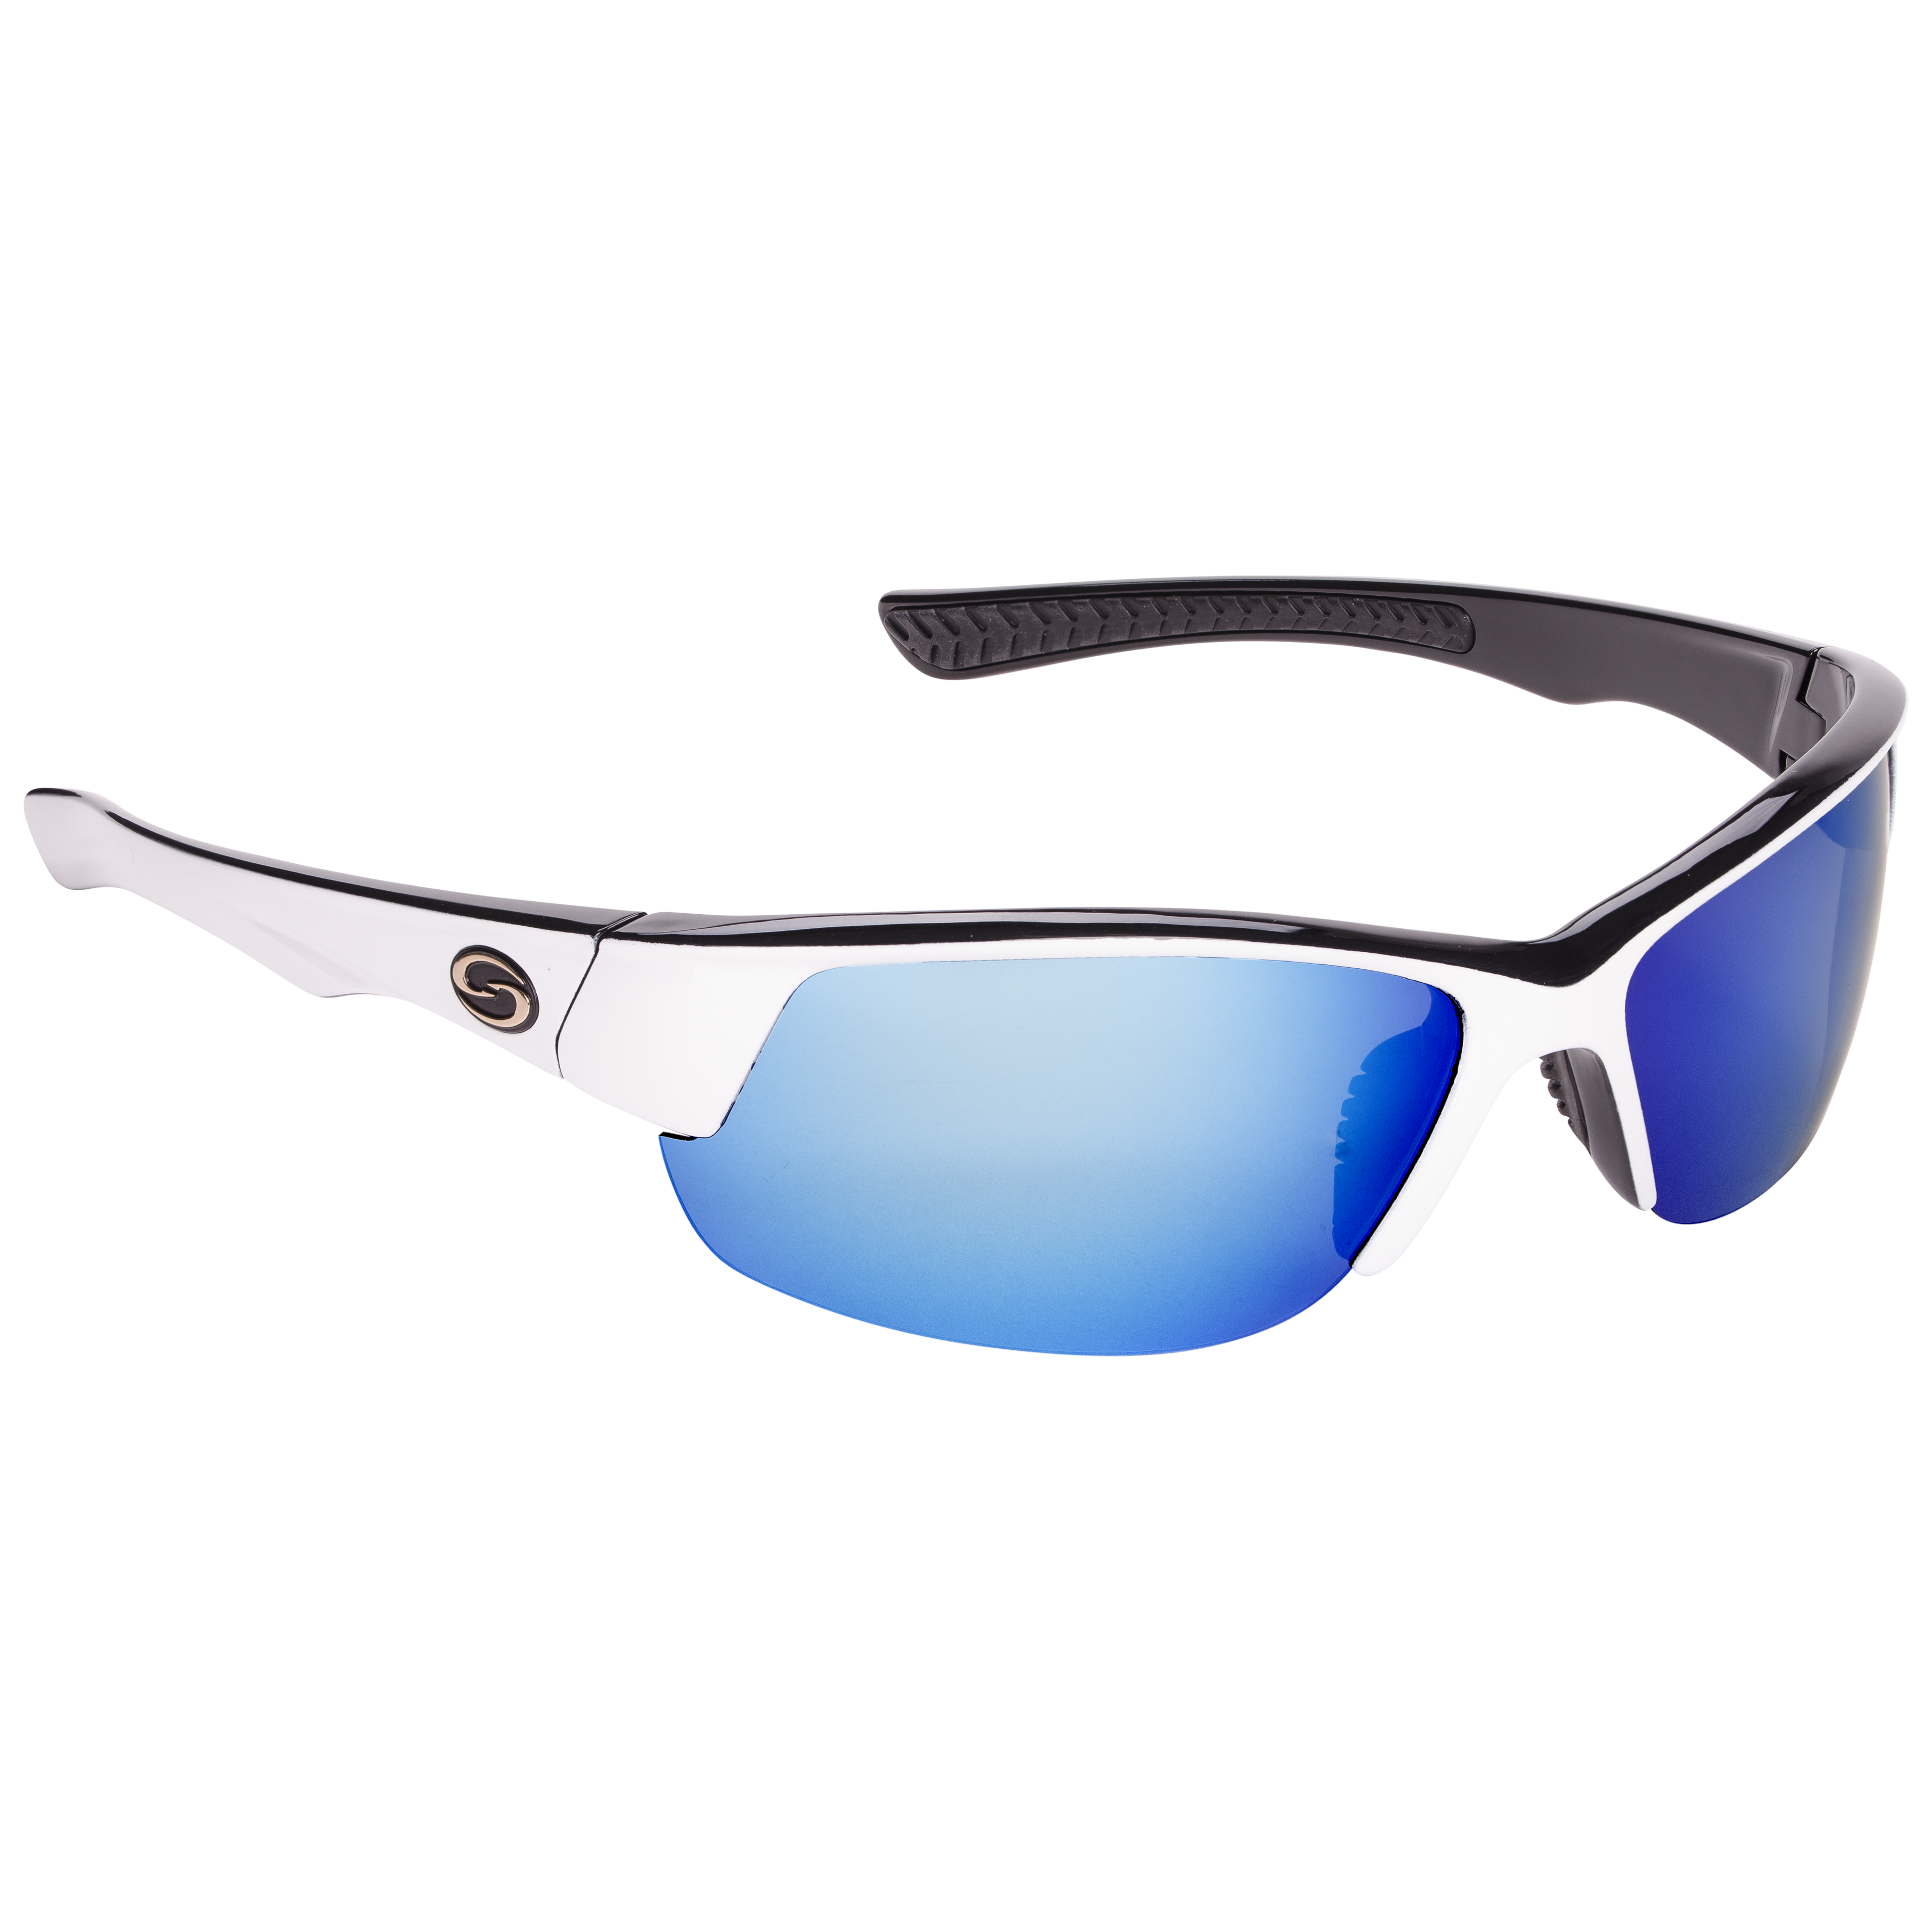 Strike King SG-S11533 Blue Mirror Lens Polarized Sunglasses White/Black 